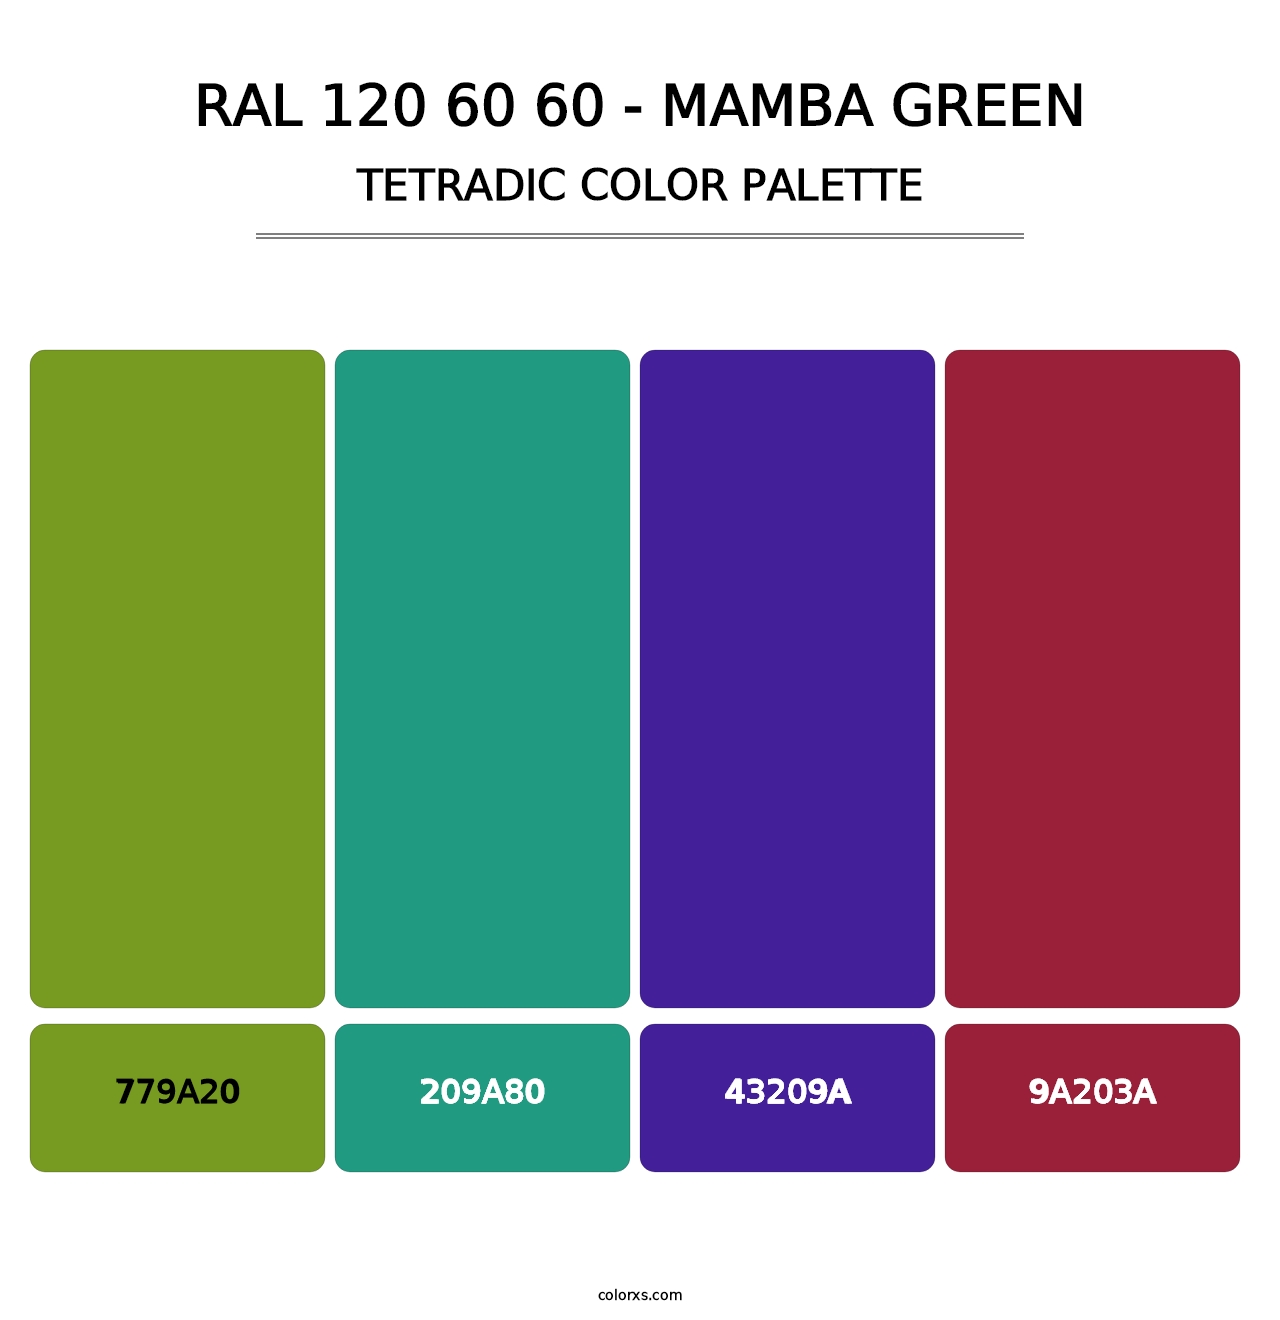 RAL 120 60 60 - Mamba Green - Tetradic Color Palette